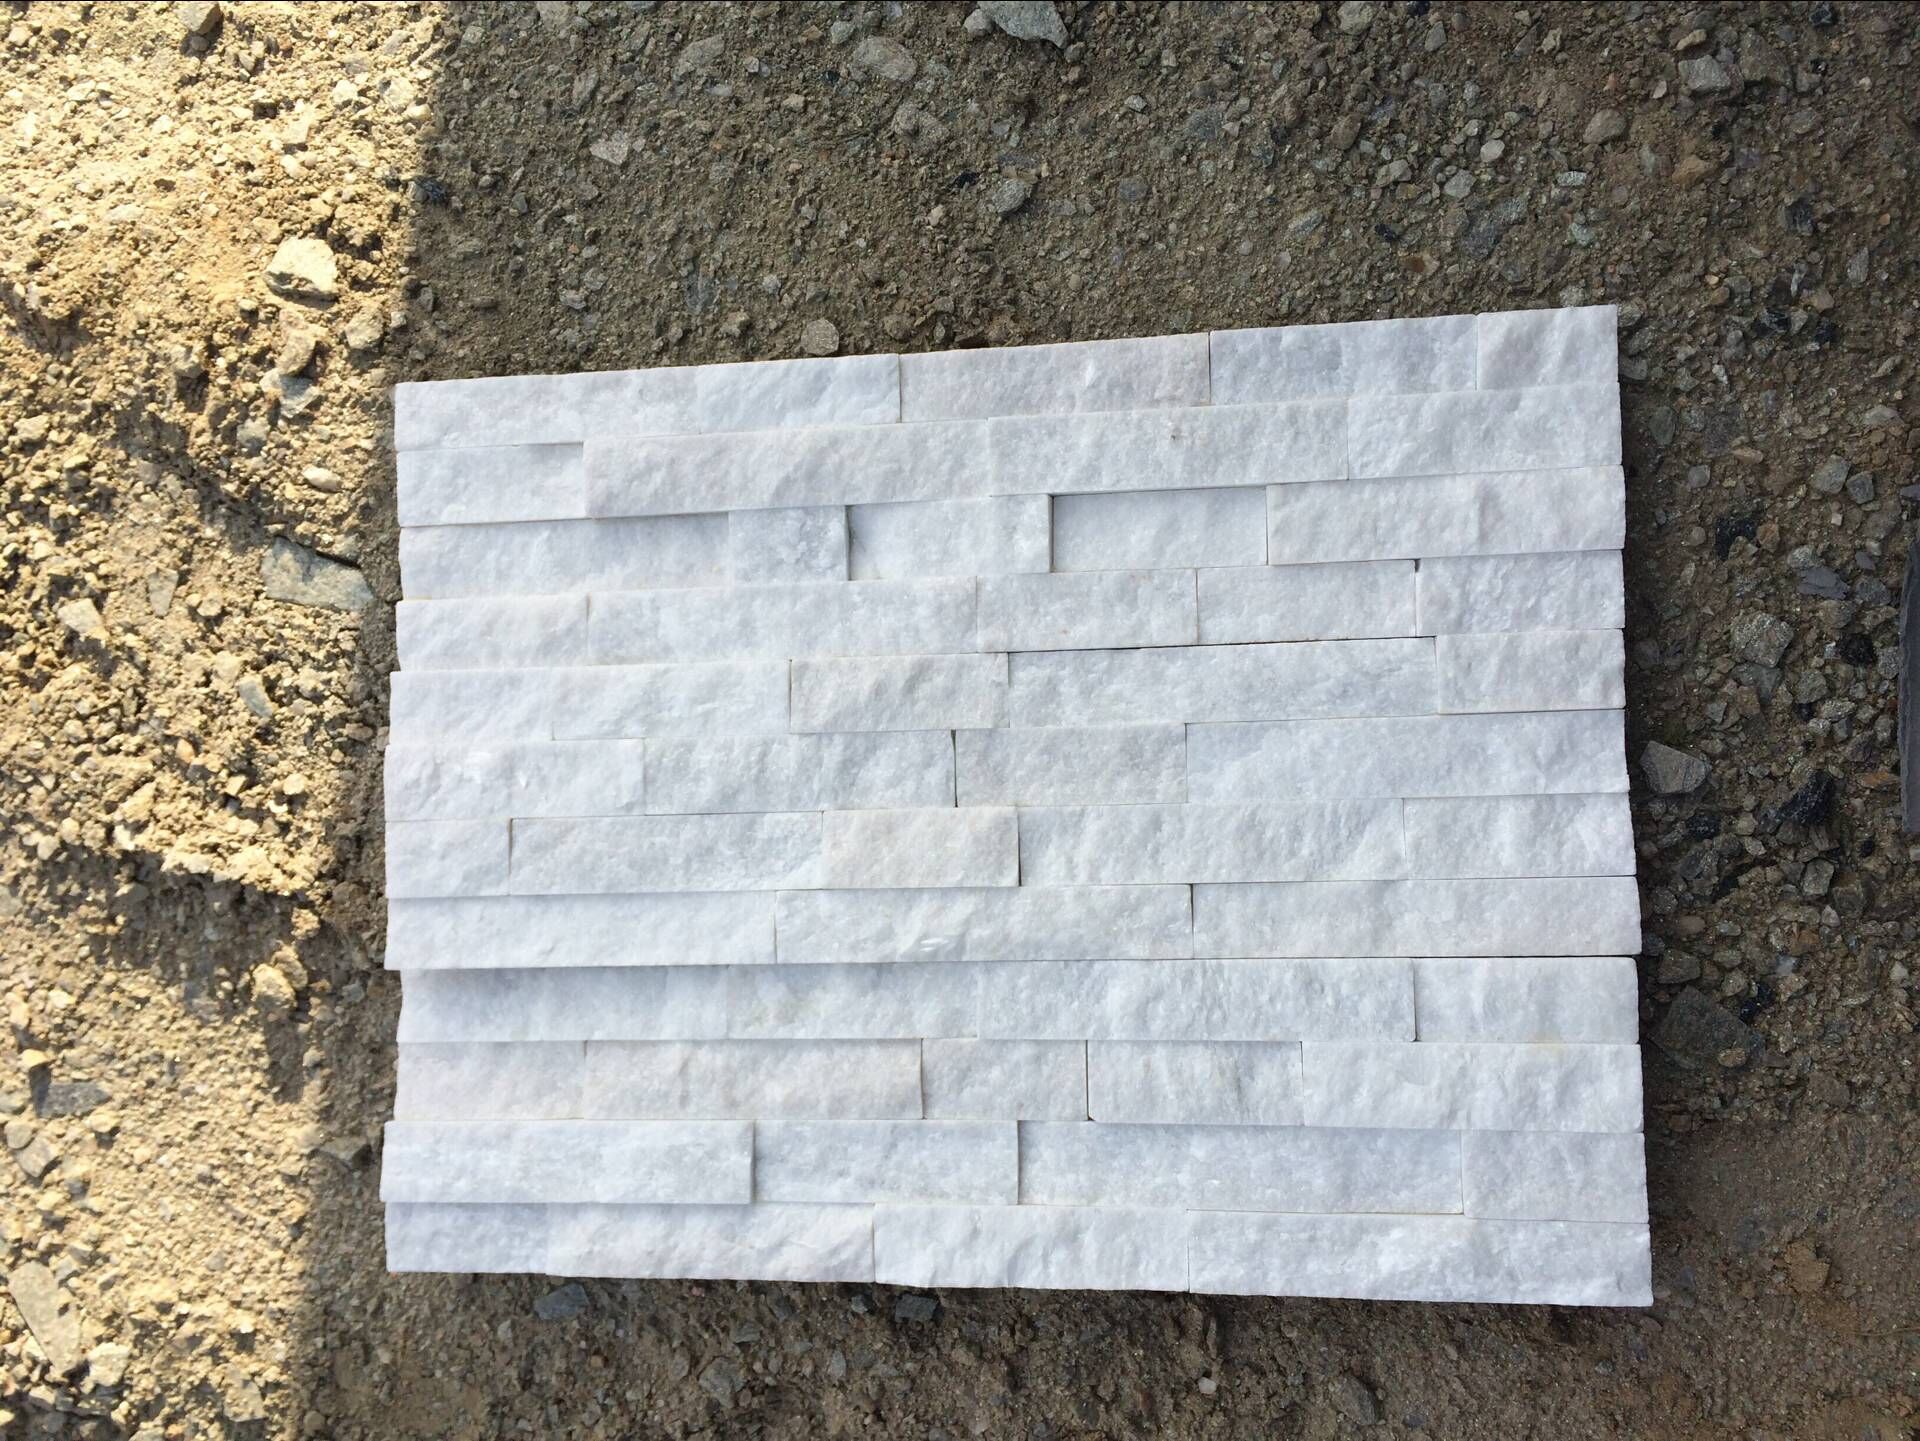 RSC 001 壁タイル用の白い珪岩文化石
